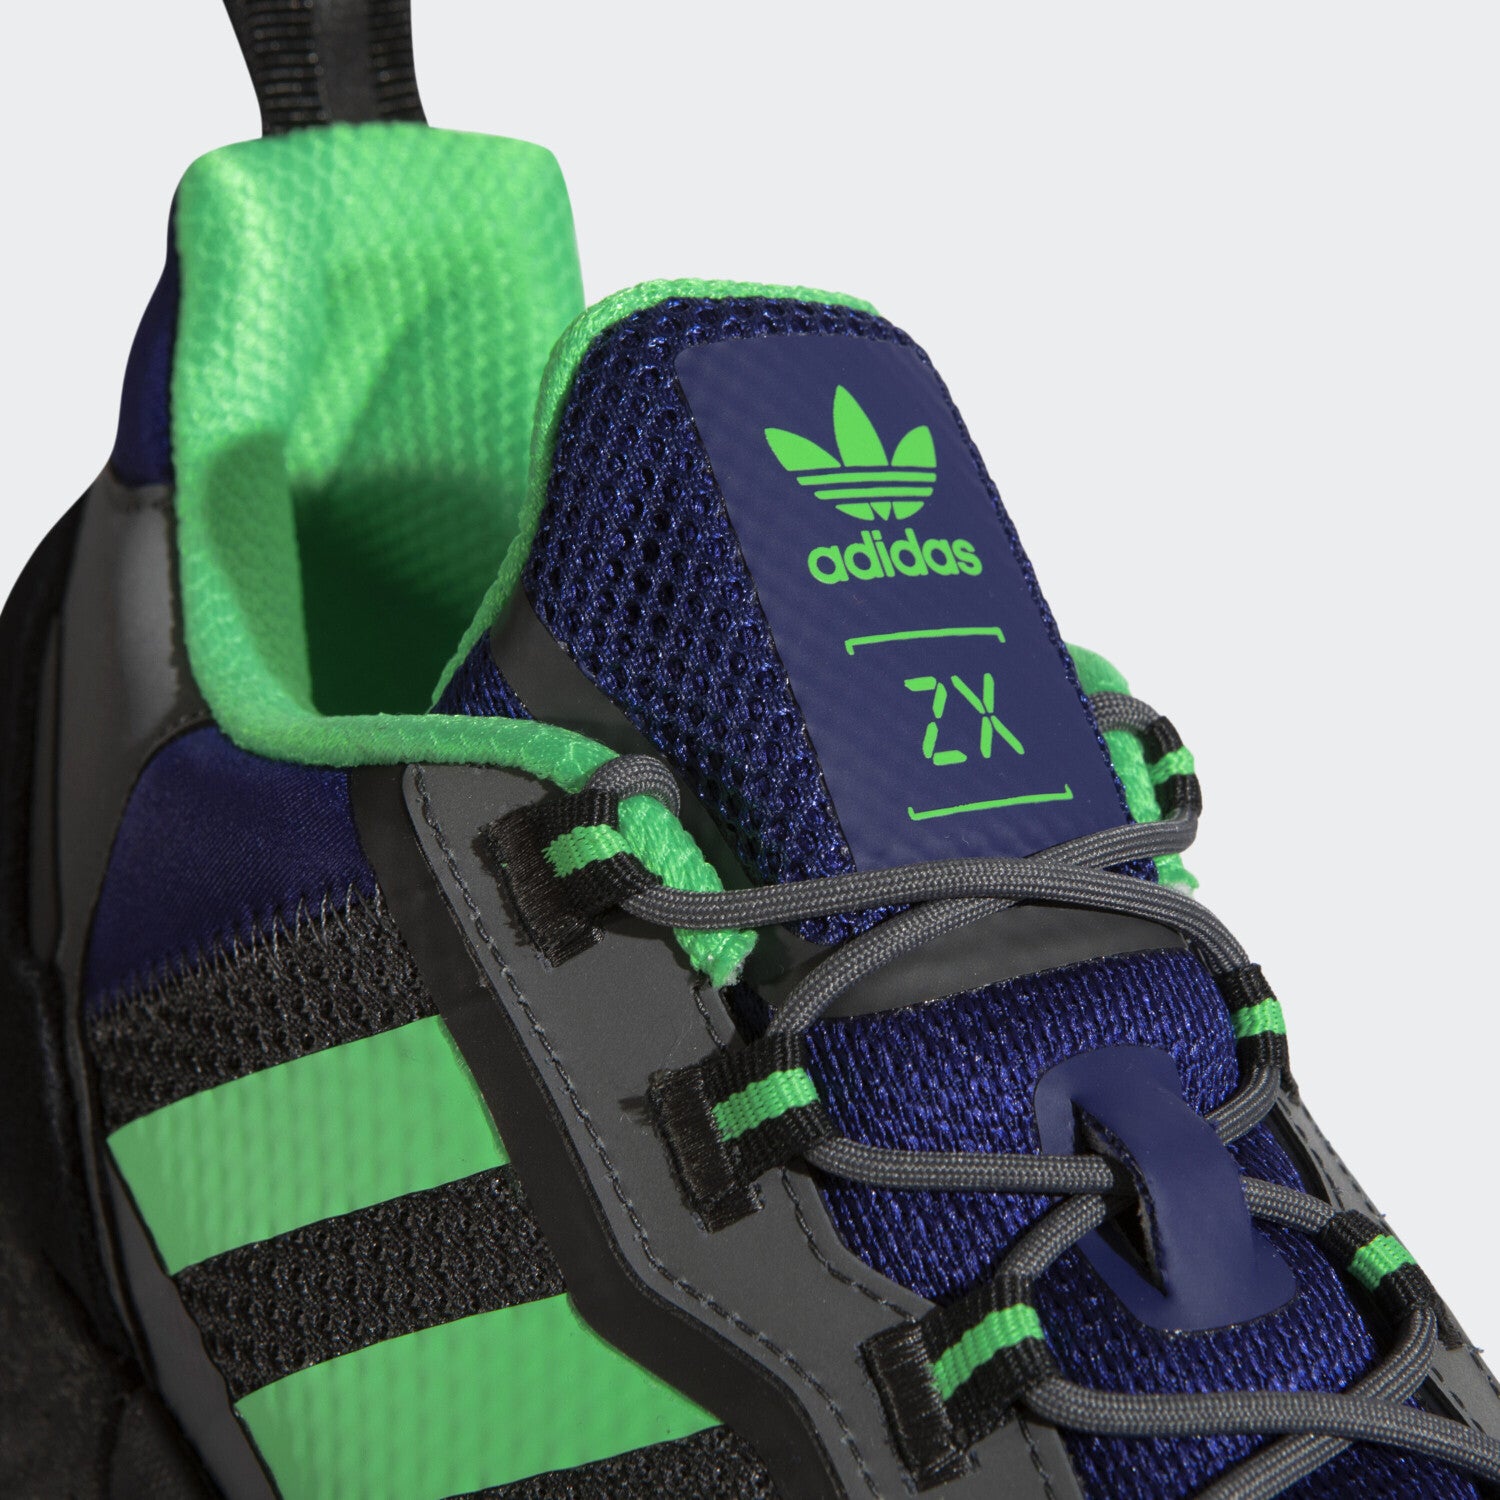 ADIDAS ZX 1K Boost Men's Shoes - H00430 Size - 9